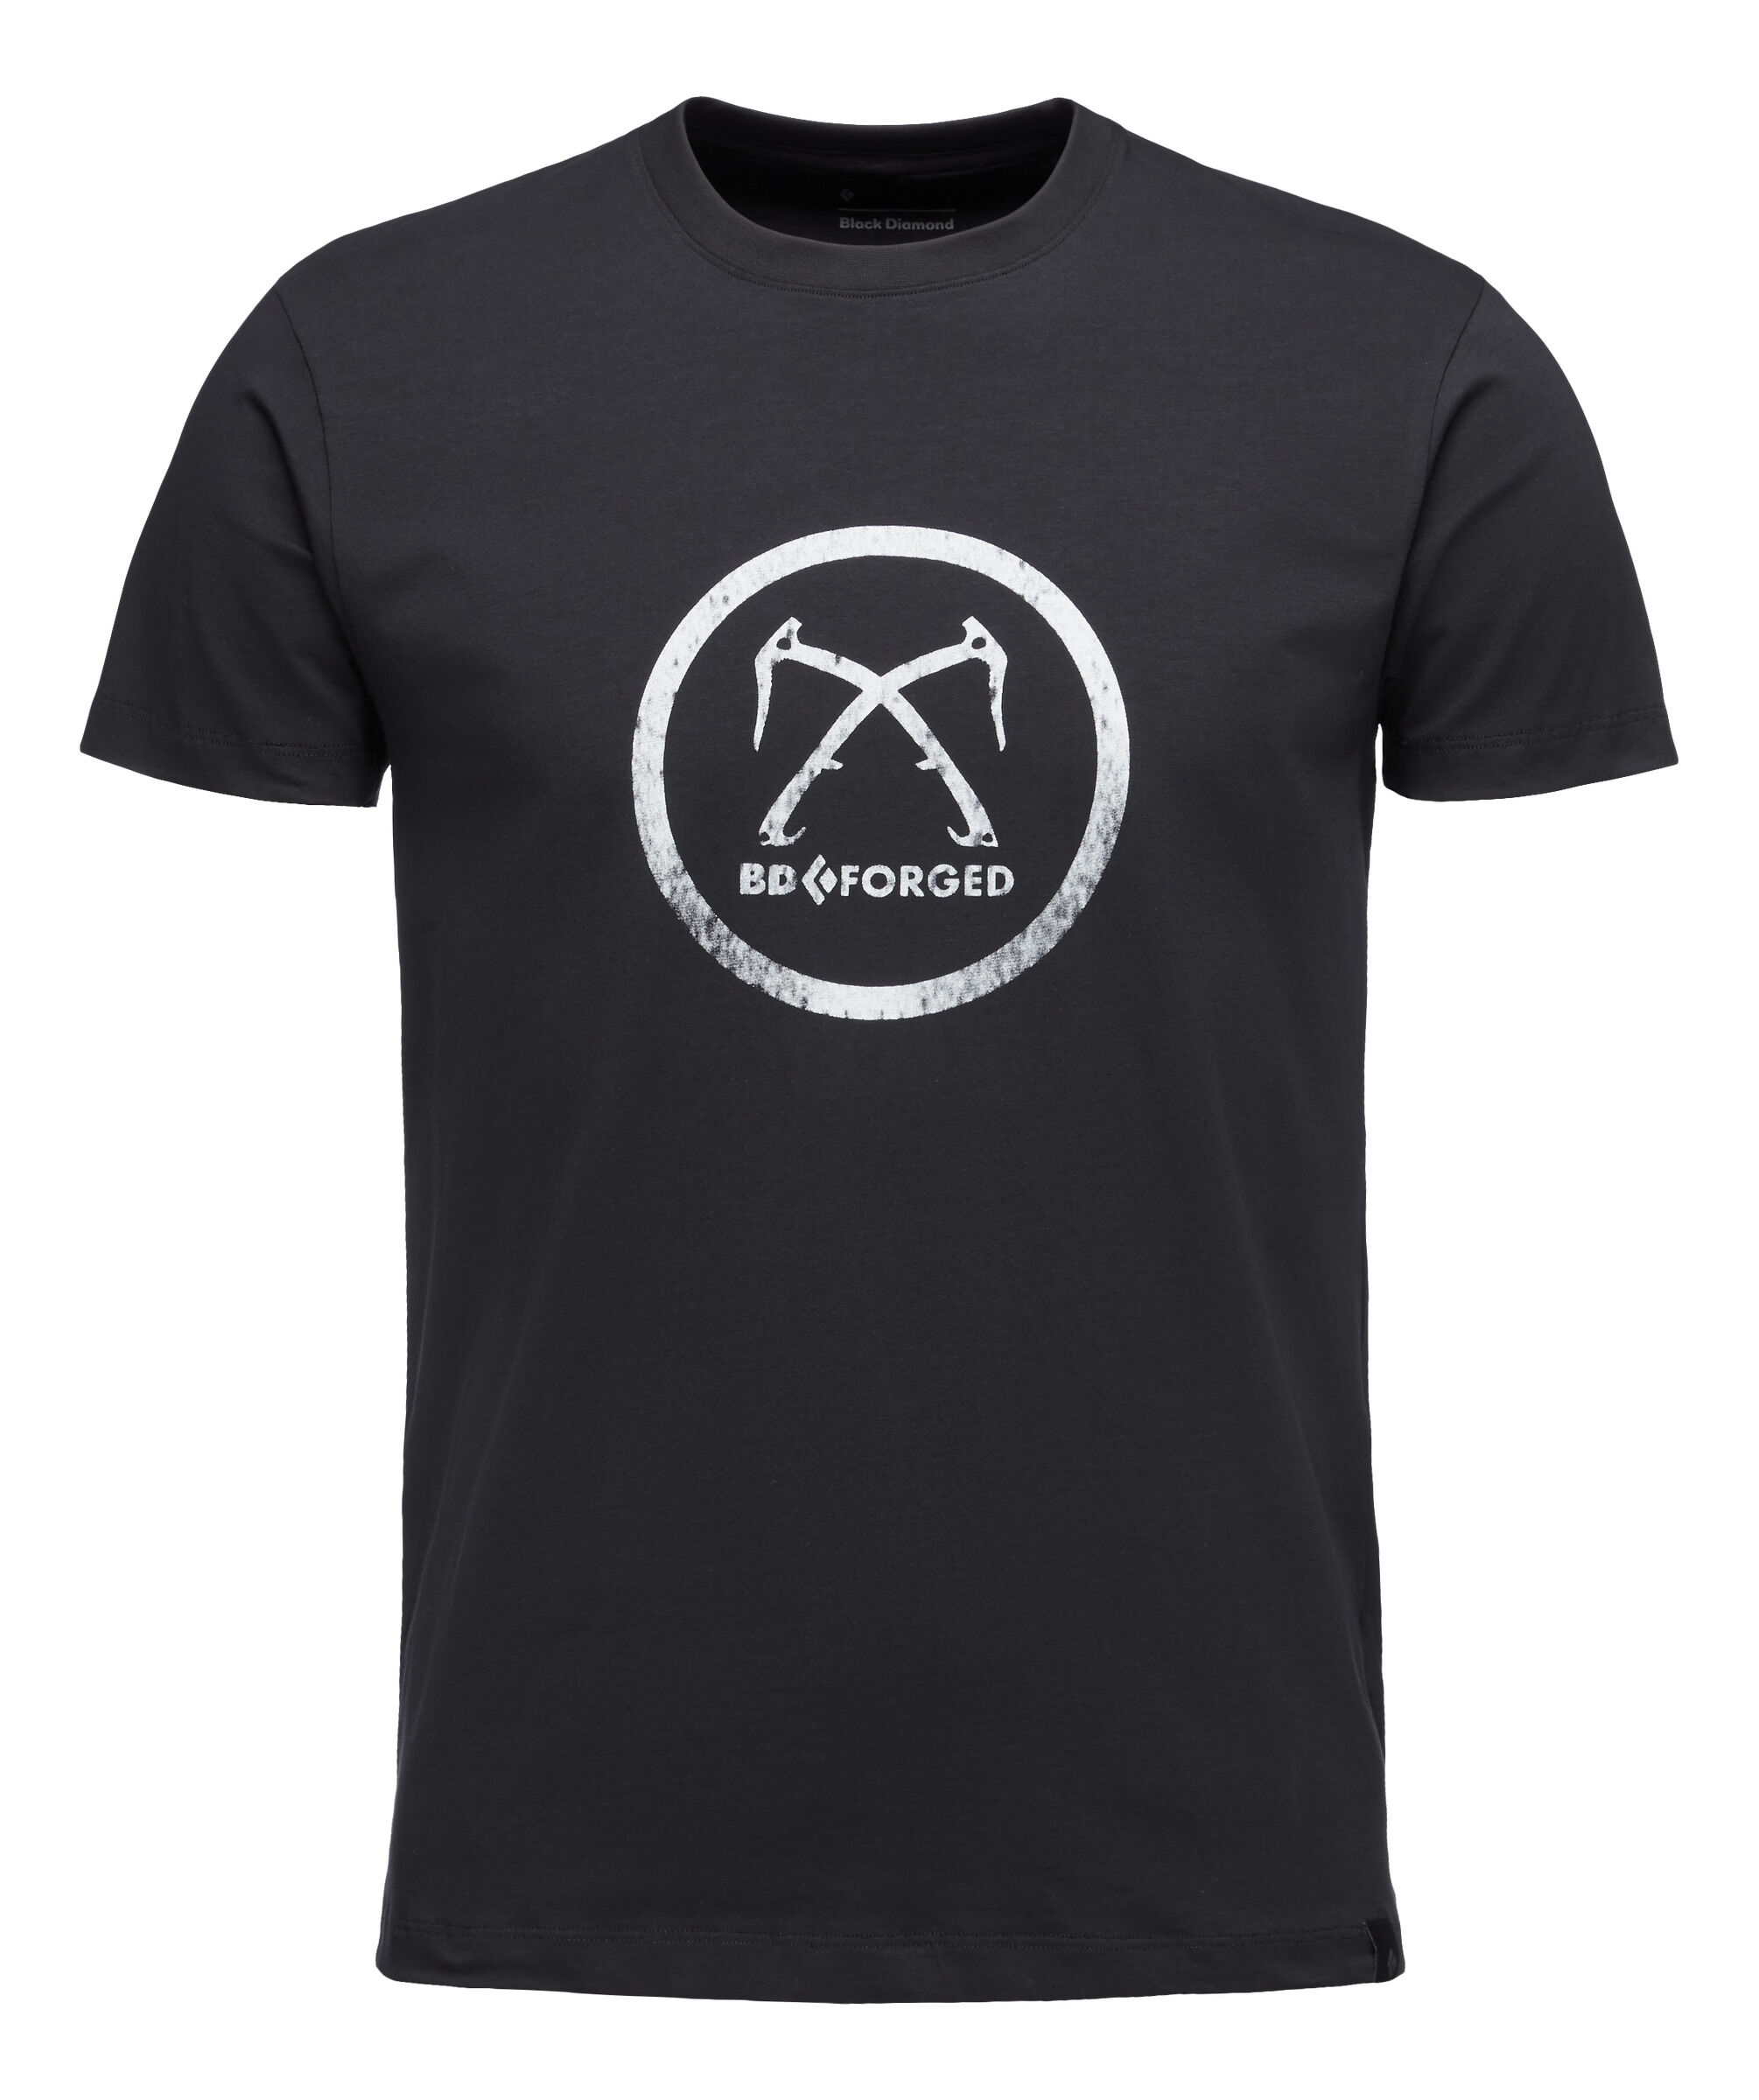 Black Diamond - Bd Forged Tee - T-shirt - Men's